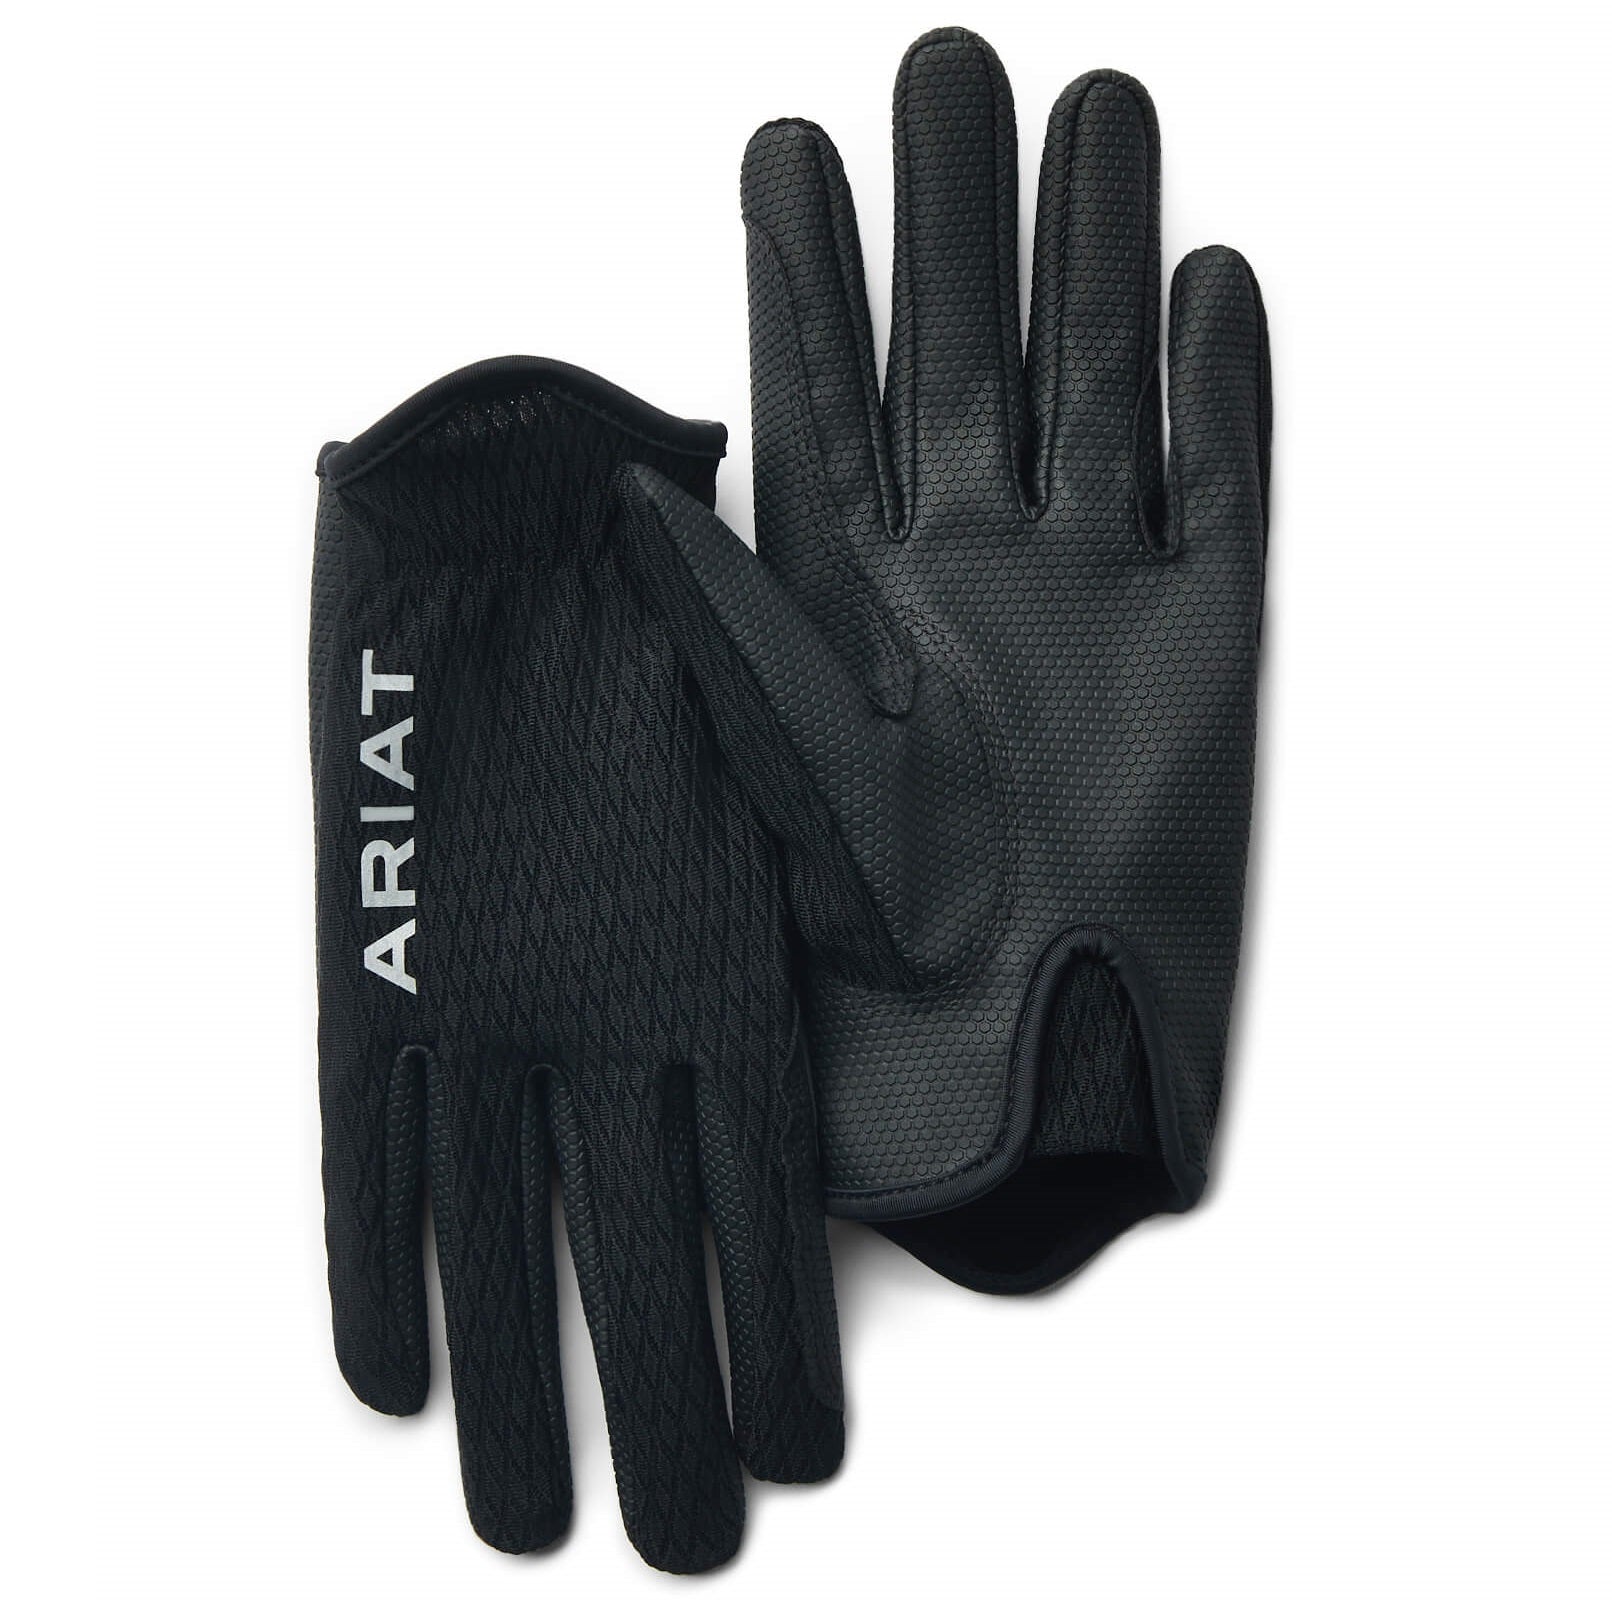 ARIAT Cool Grip Riding Gloves - Black